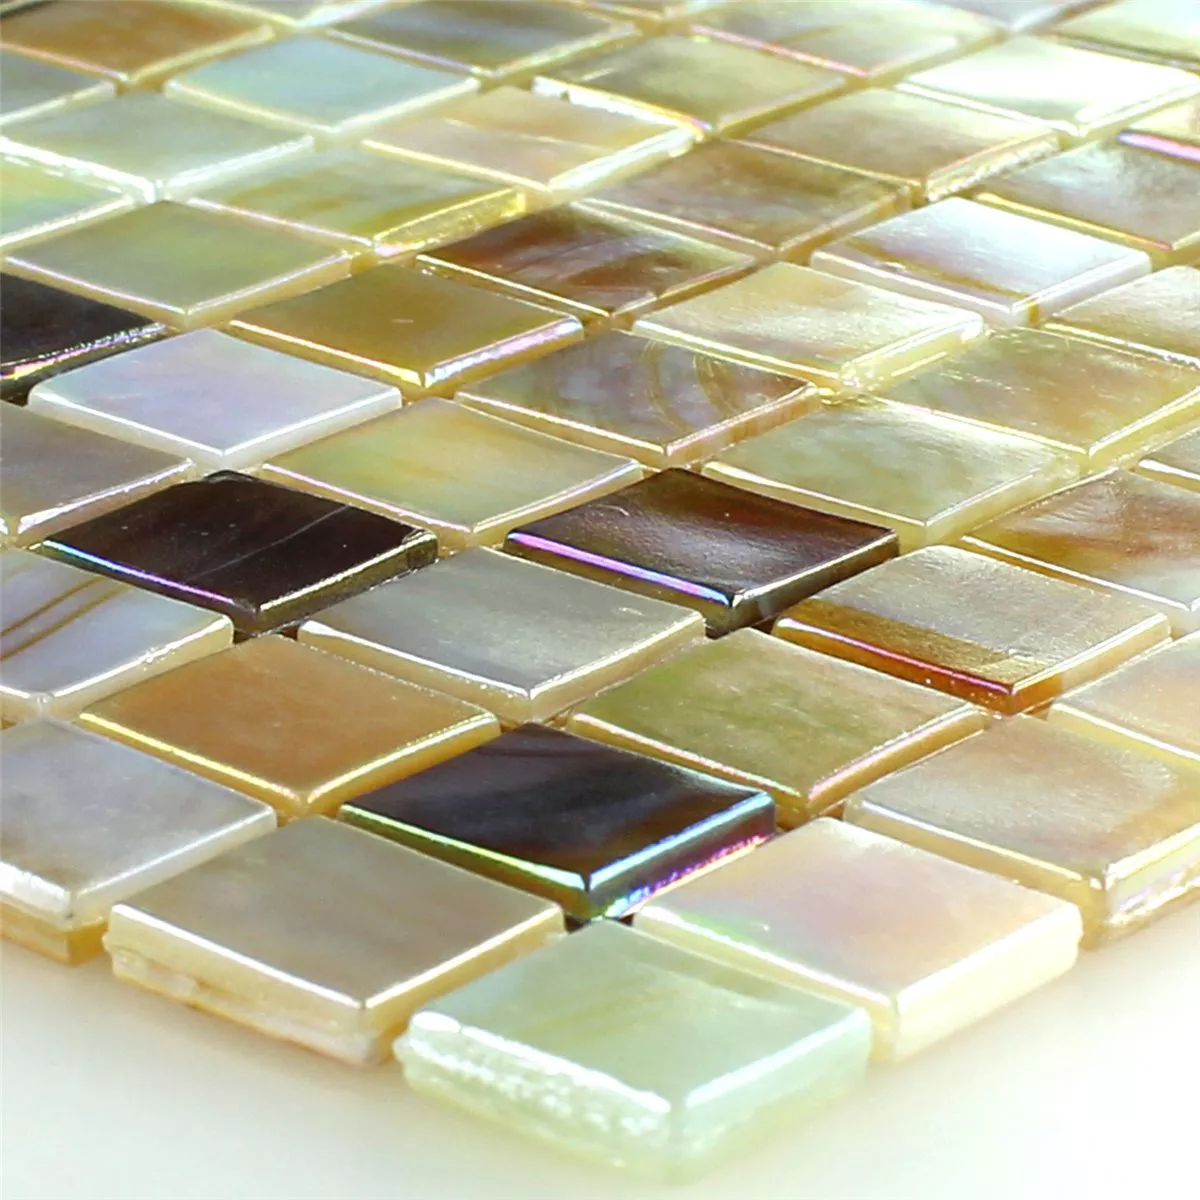 Mosaic Tiles Glass Nacre Mix Sandy 15x15x4mm